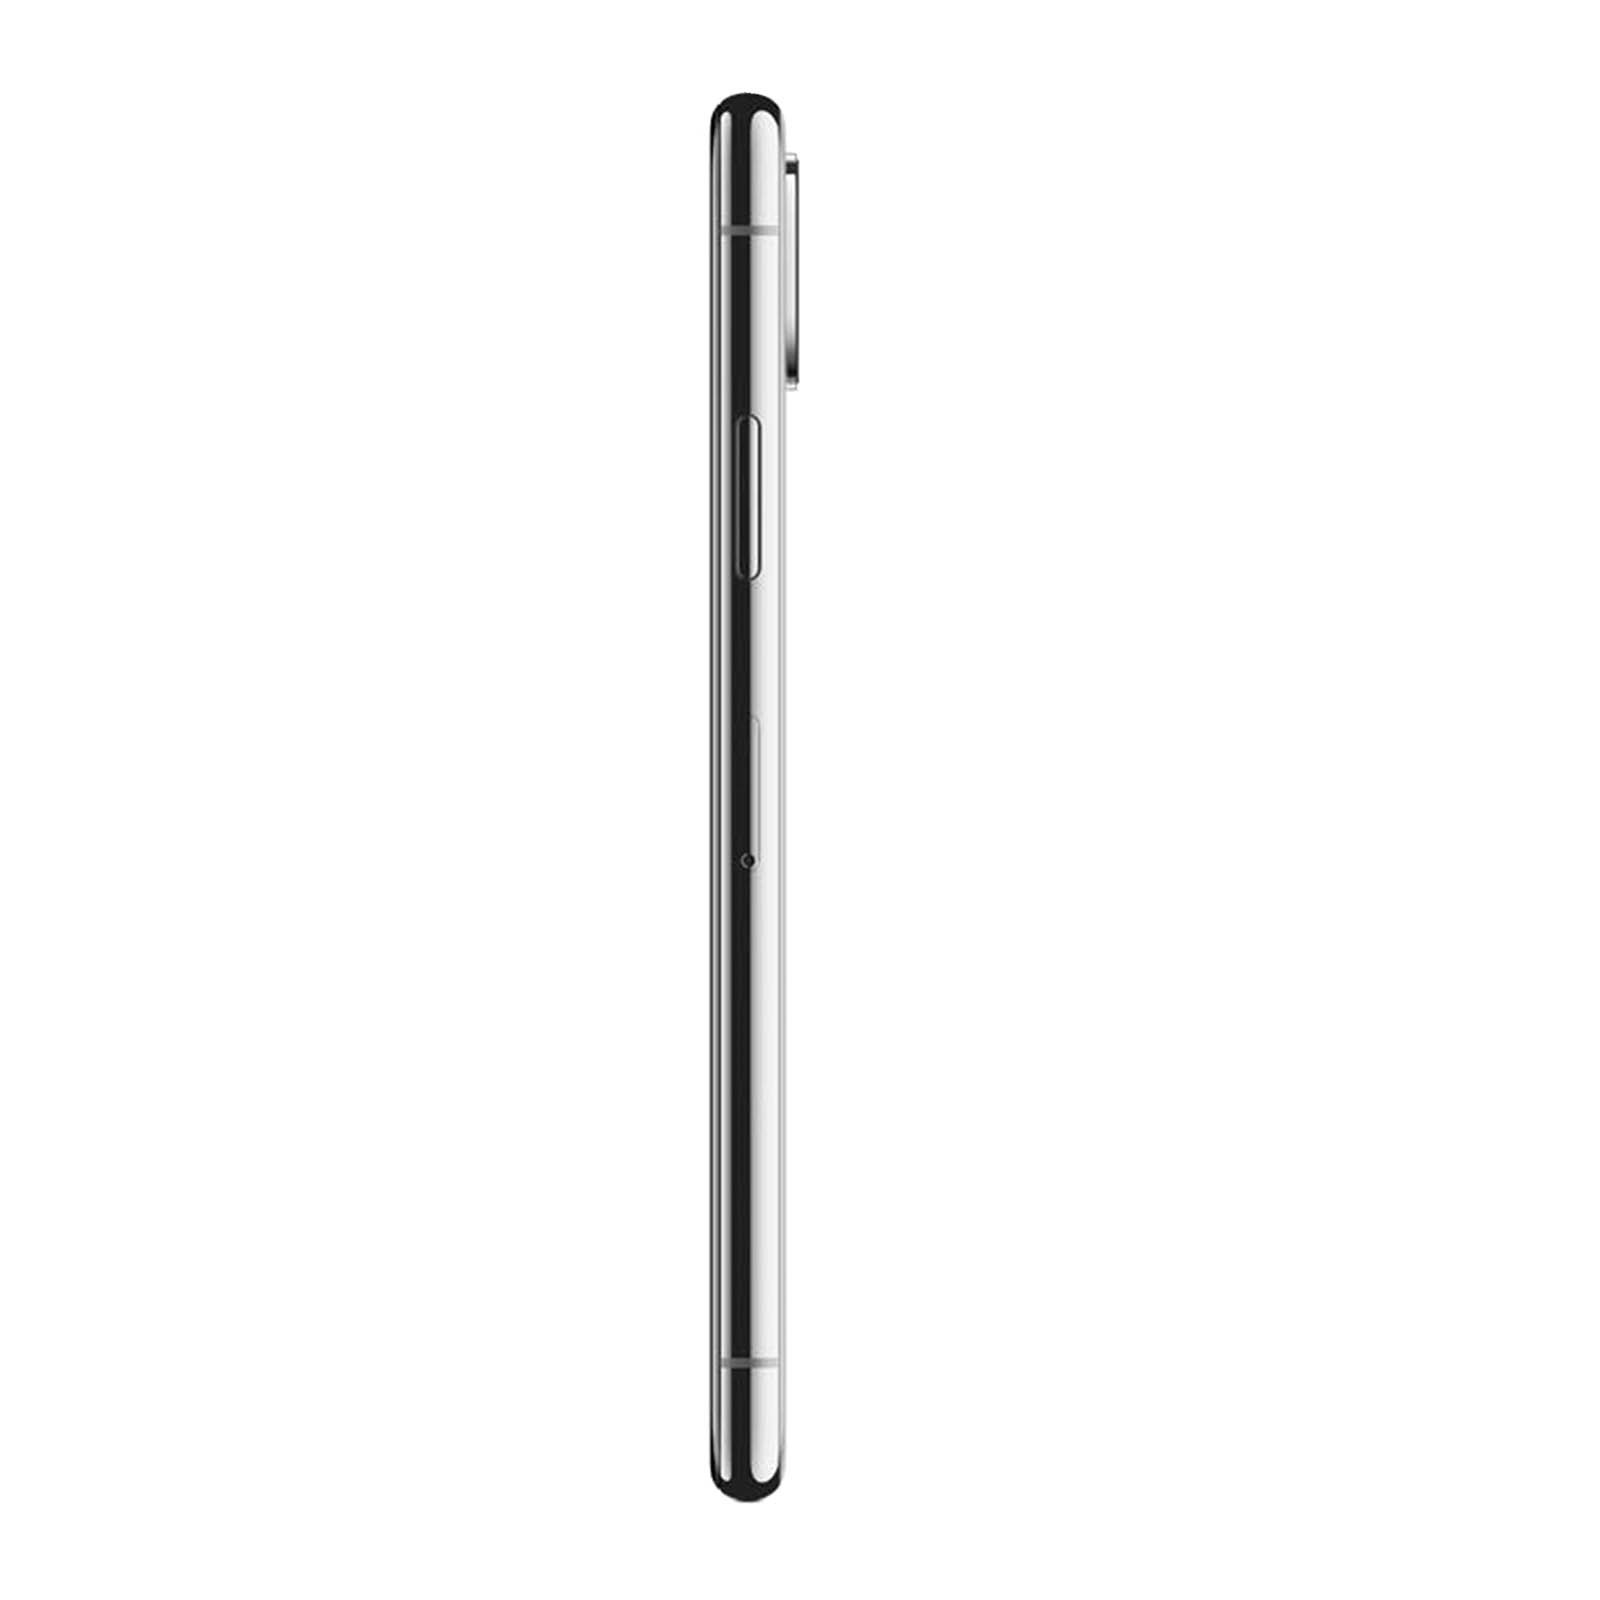 Apple iPhone XS Max 256GB Space Grey Pristine - Unlocked